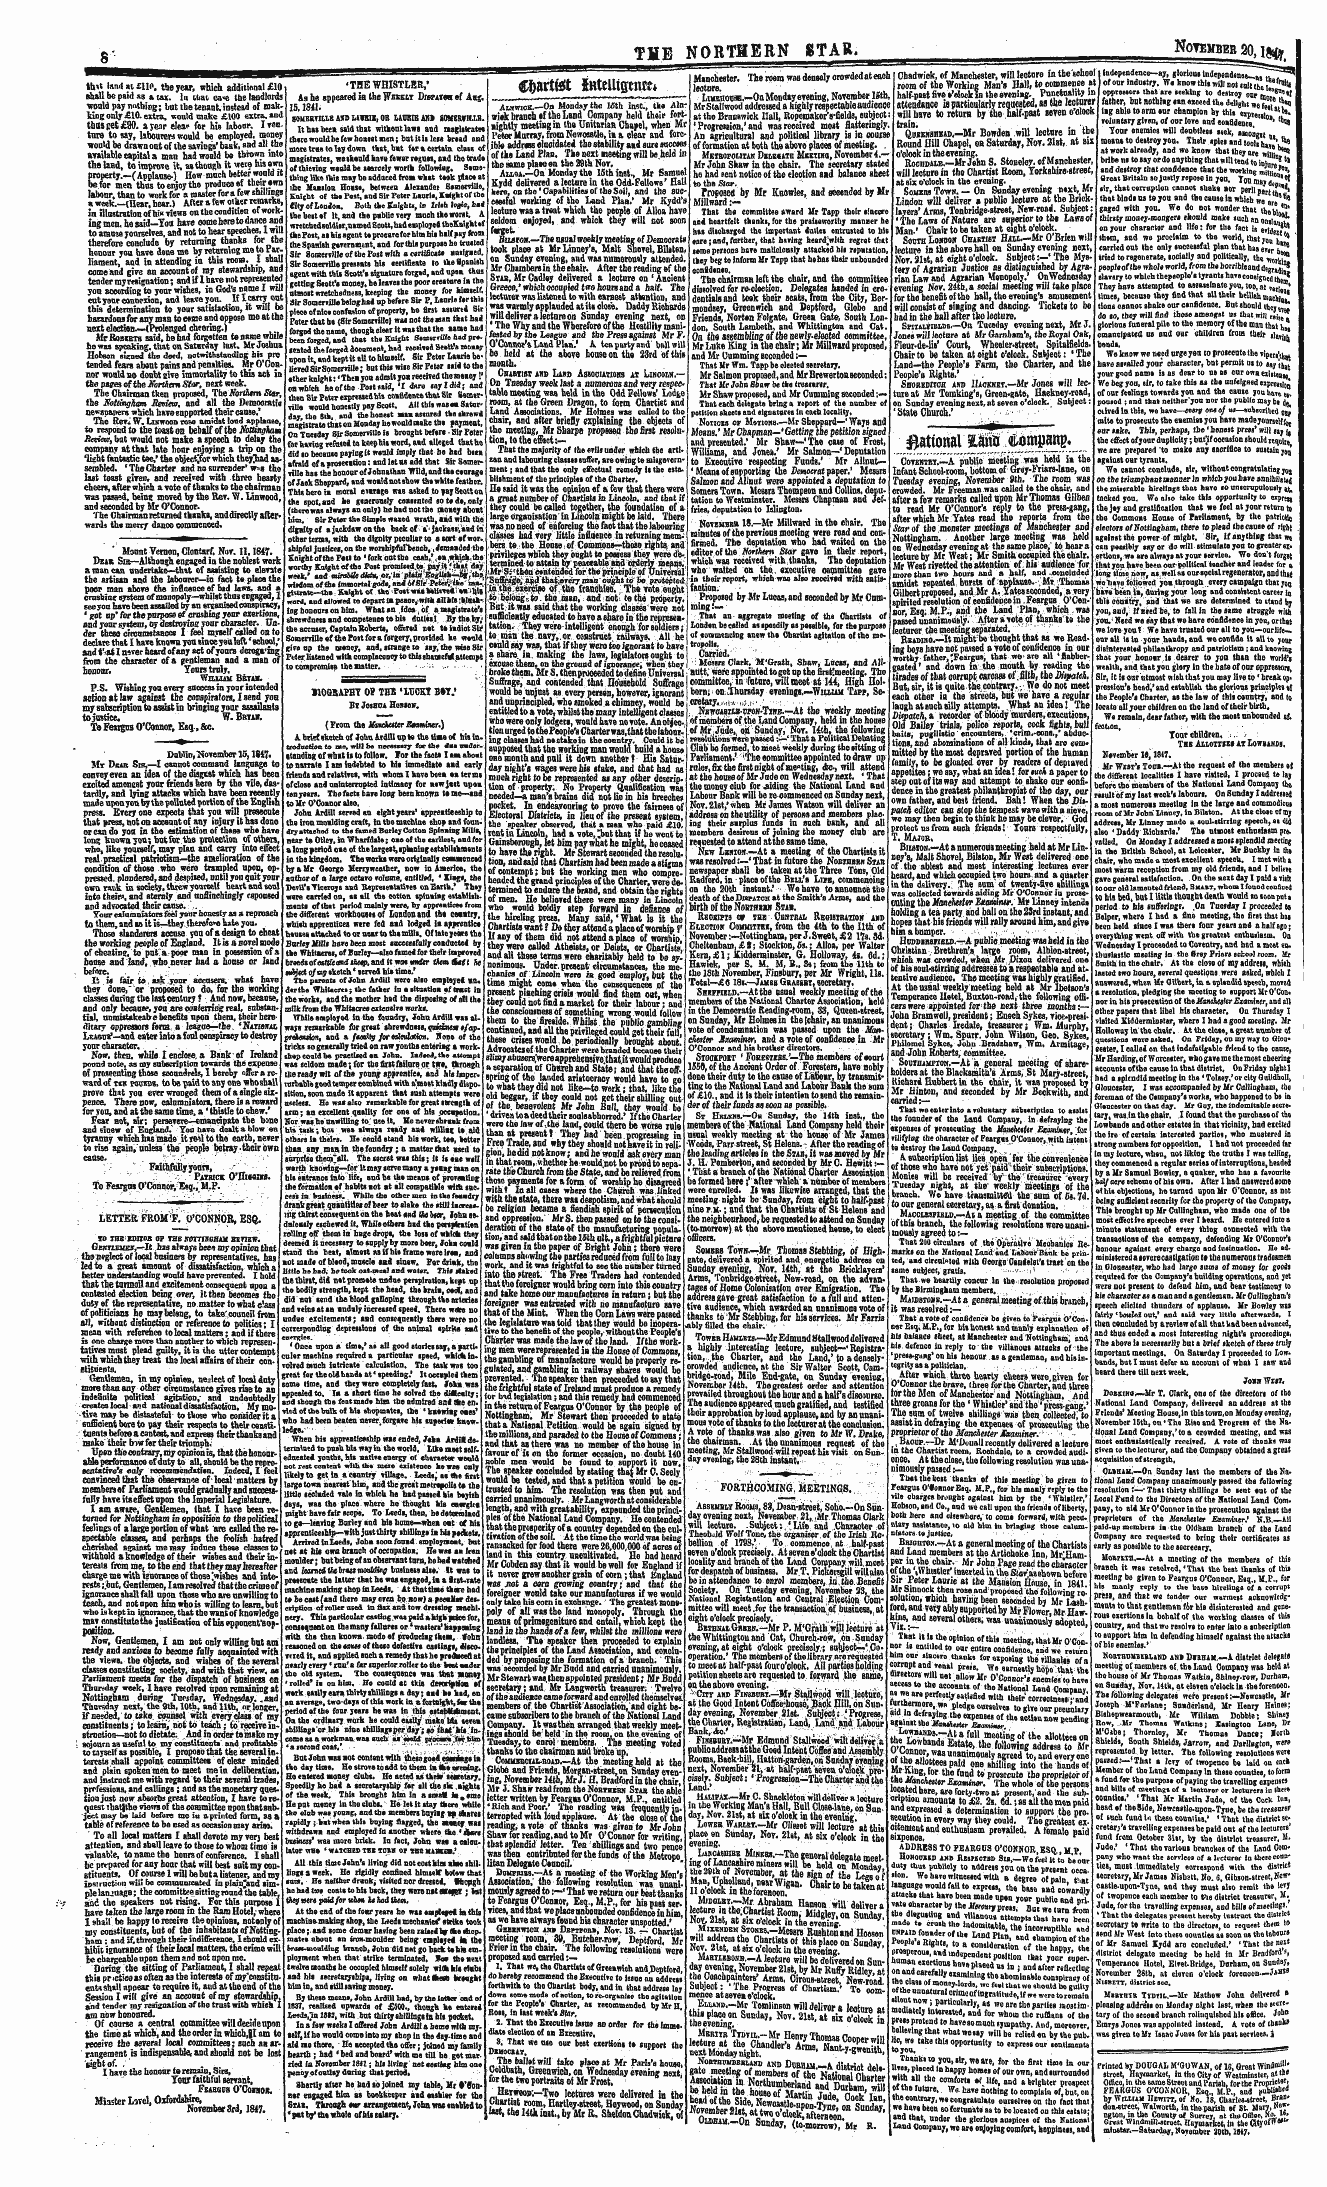 Northern Star (1837-1852): jS F Y, 3rd edition - Siruoiiiujutu 1 Ciiu Iim Iy Estminsier Printed By Docgah M'Gowan, Of 16, Great Windnd'!*.. . Nr.-.I.-. &Gt; _ A.. R... ' . .-»' . , .__ -Tine